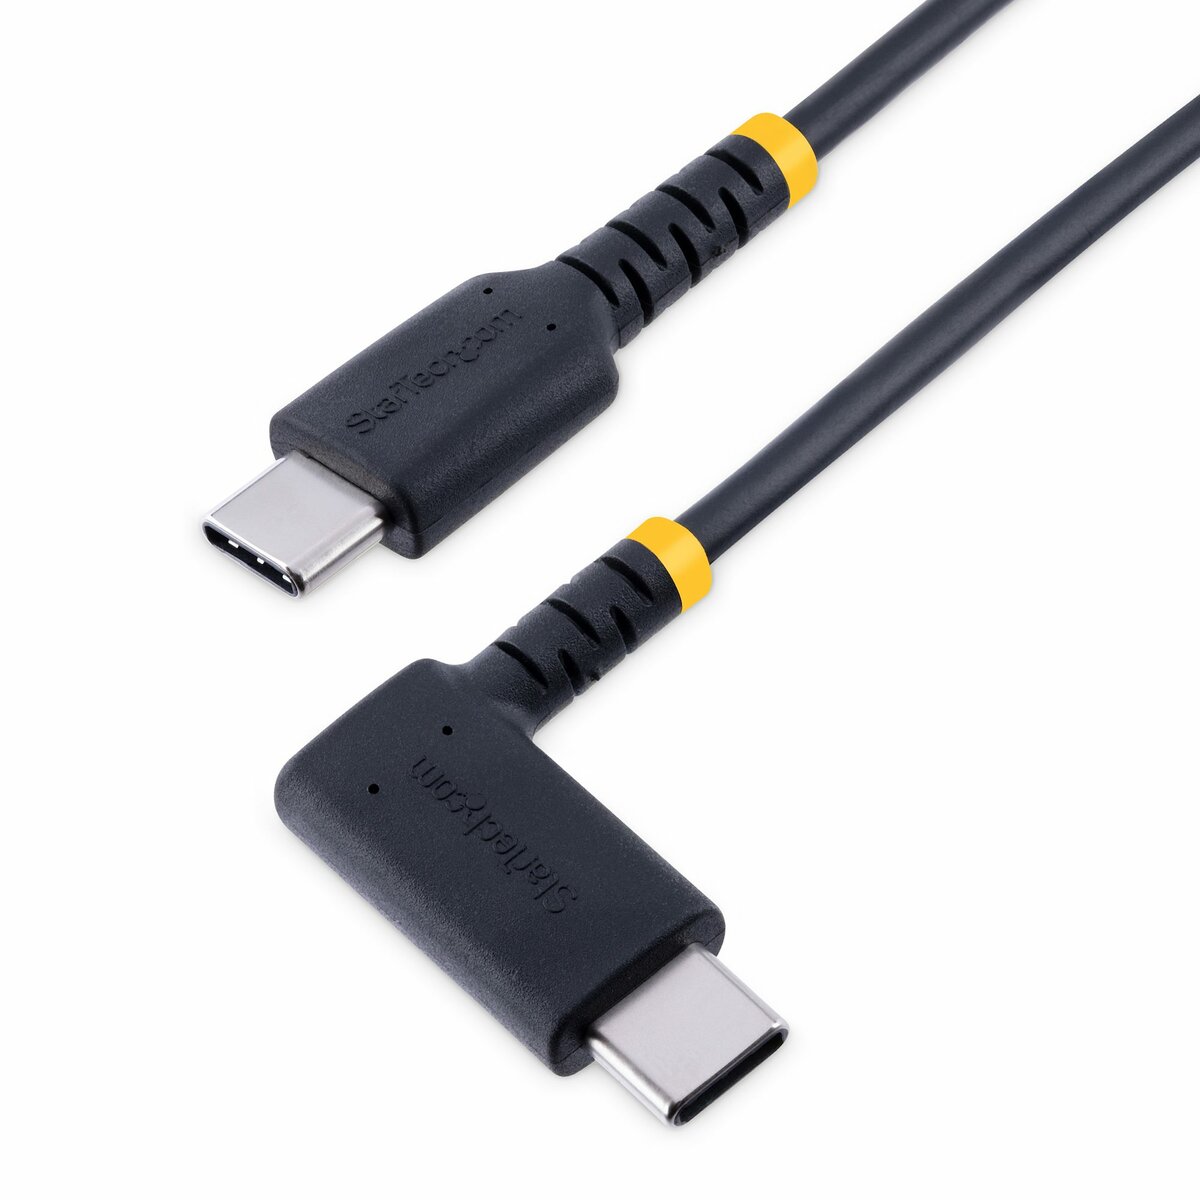 6.6ft (2m) USB 2.0 A/B Cable - Black, USB 2.0 Cables